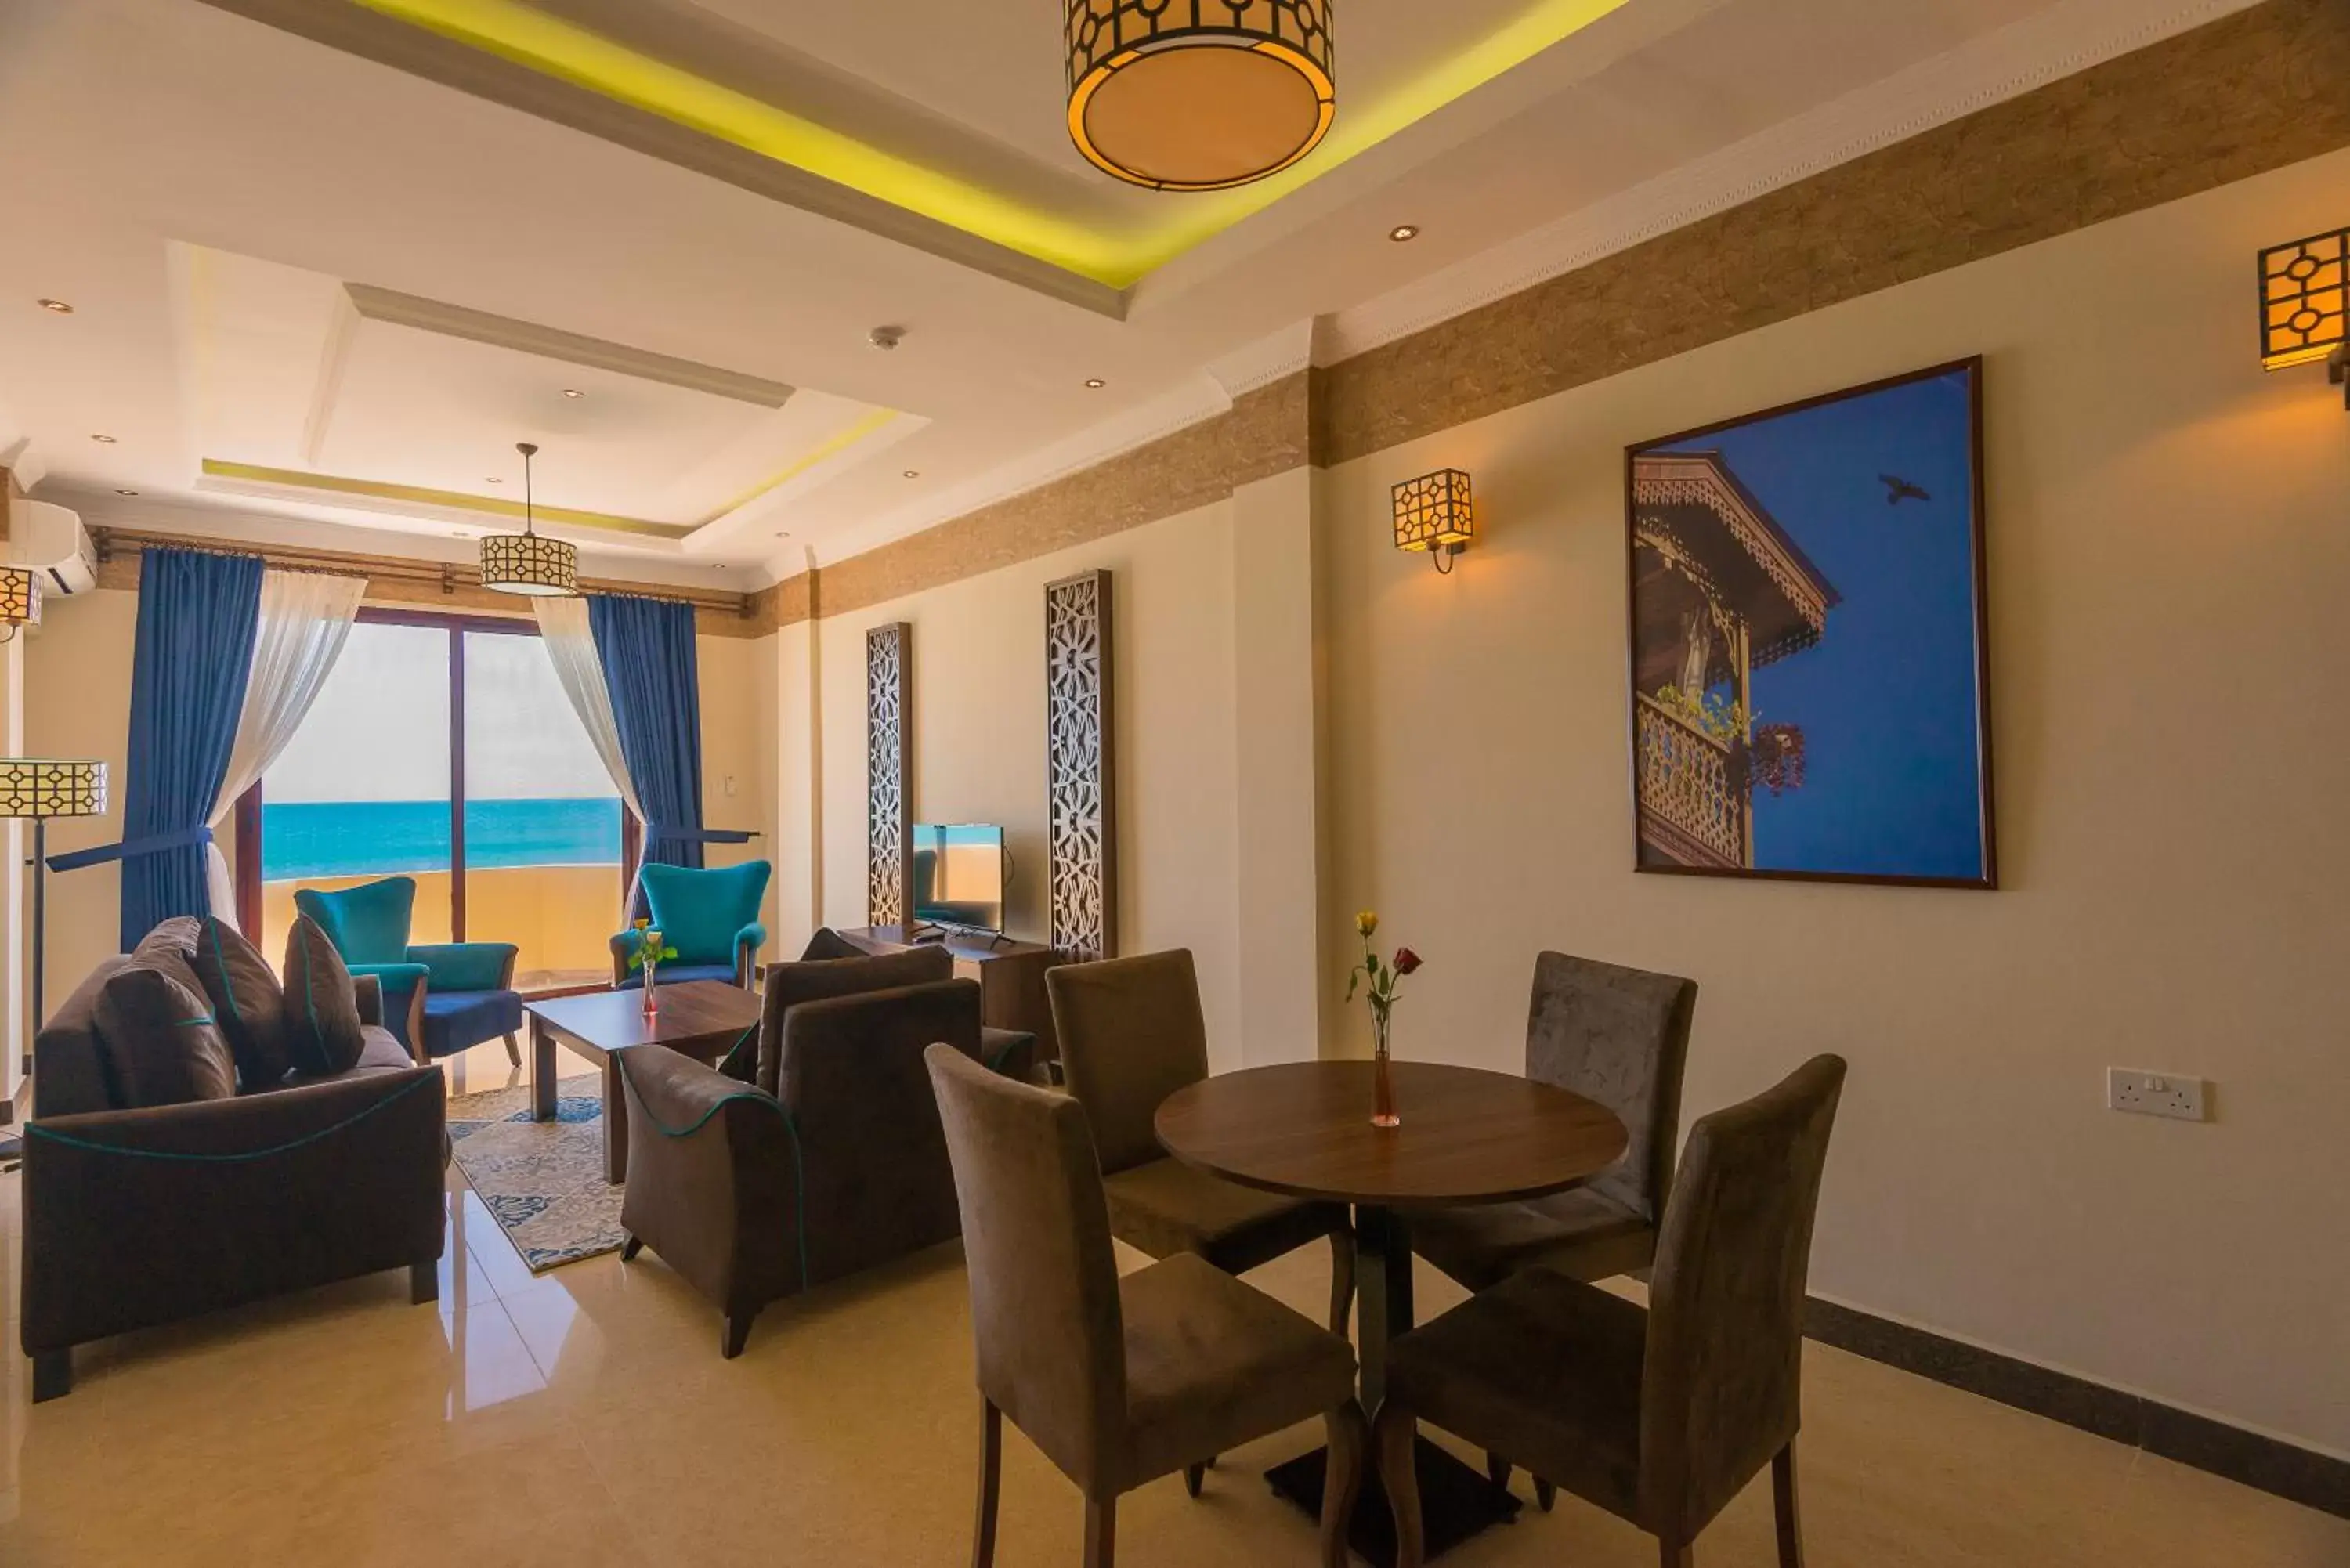 Dining area in Golden Tulip Zanzibar Resort